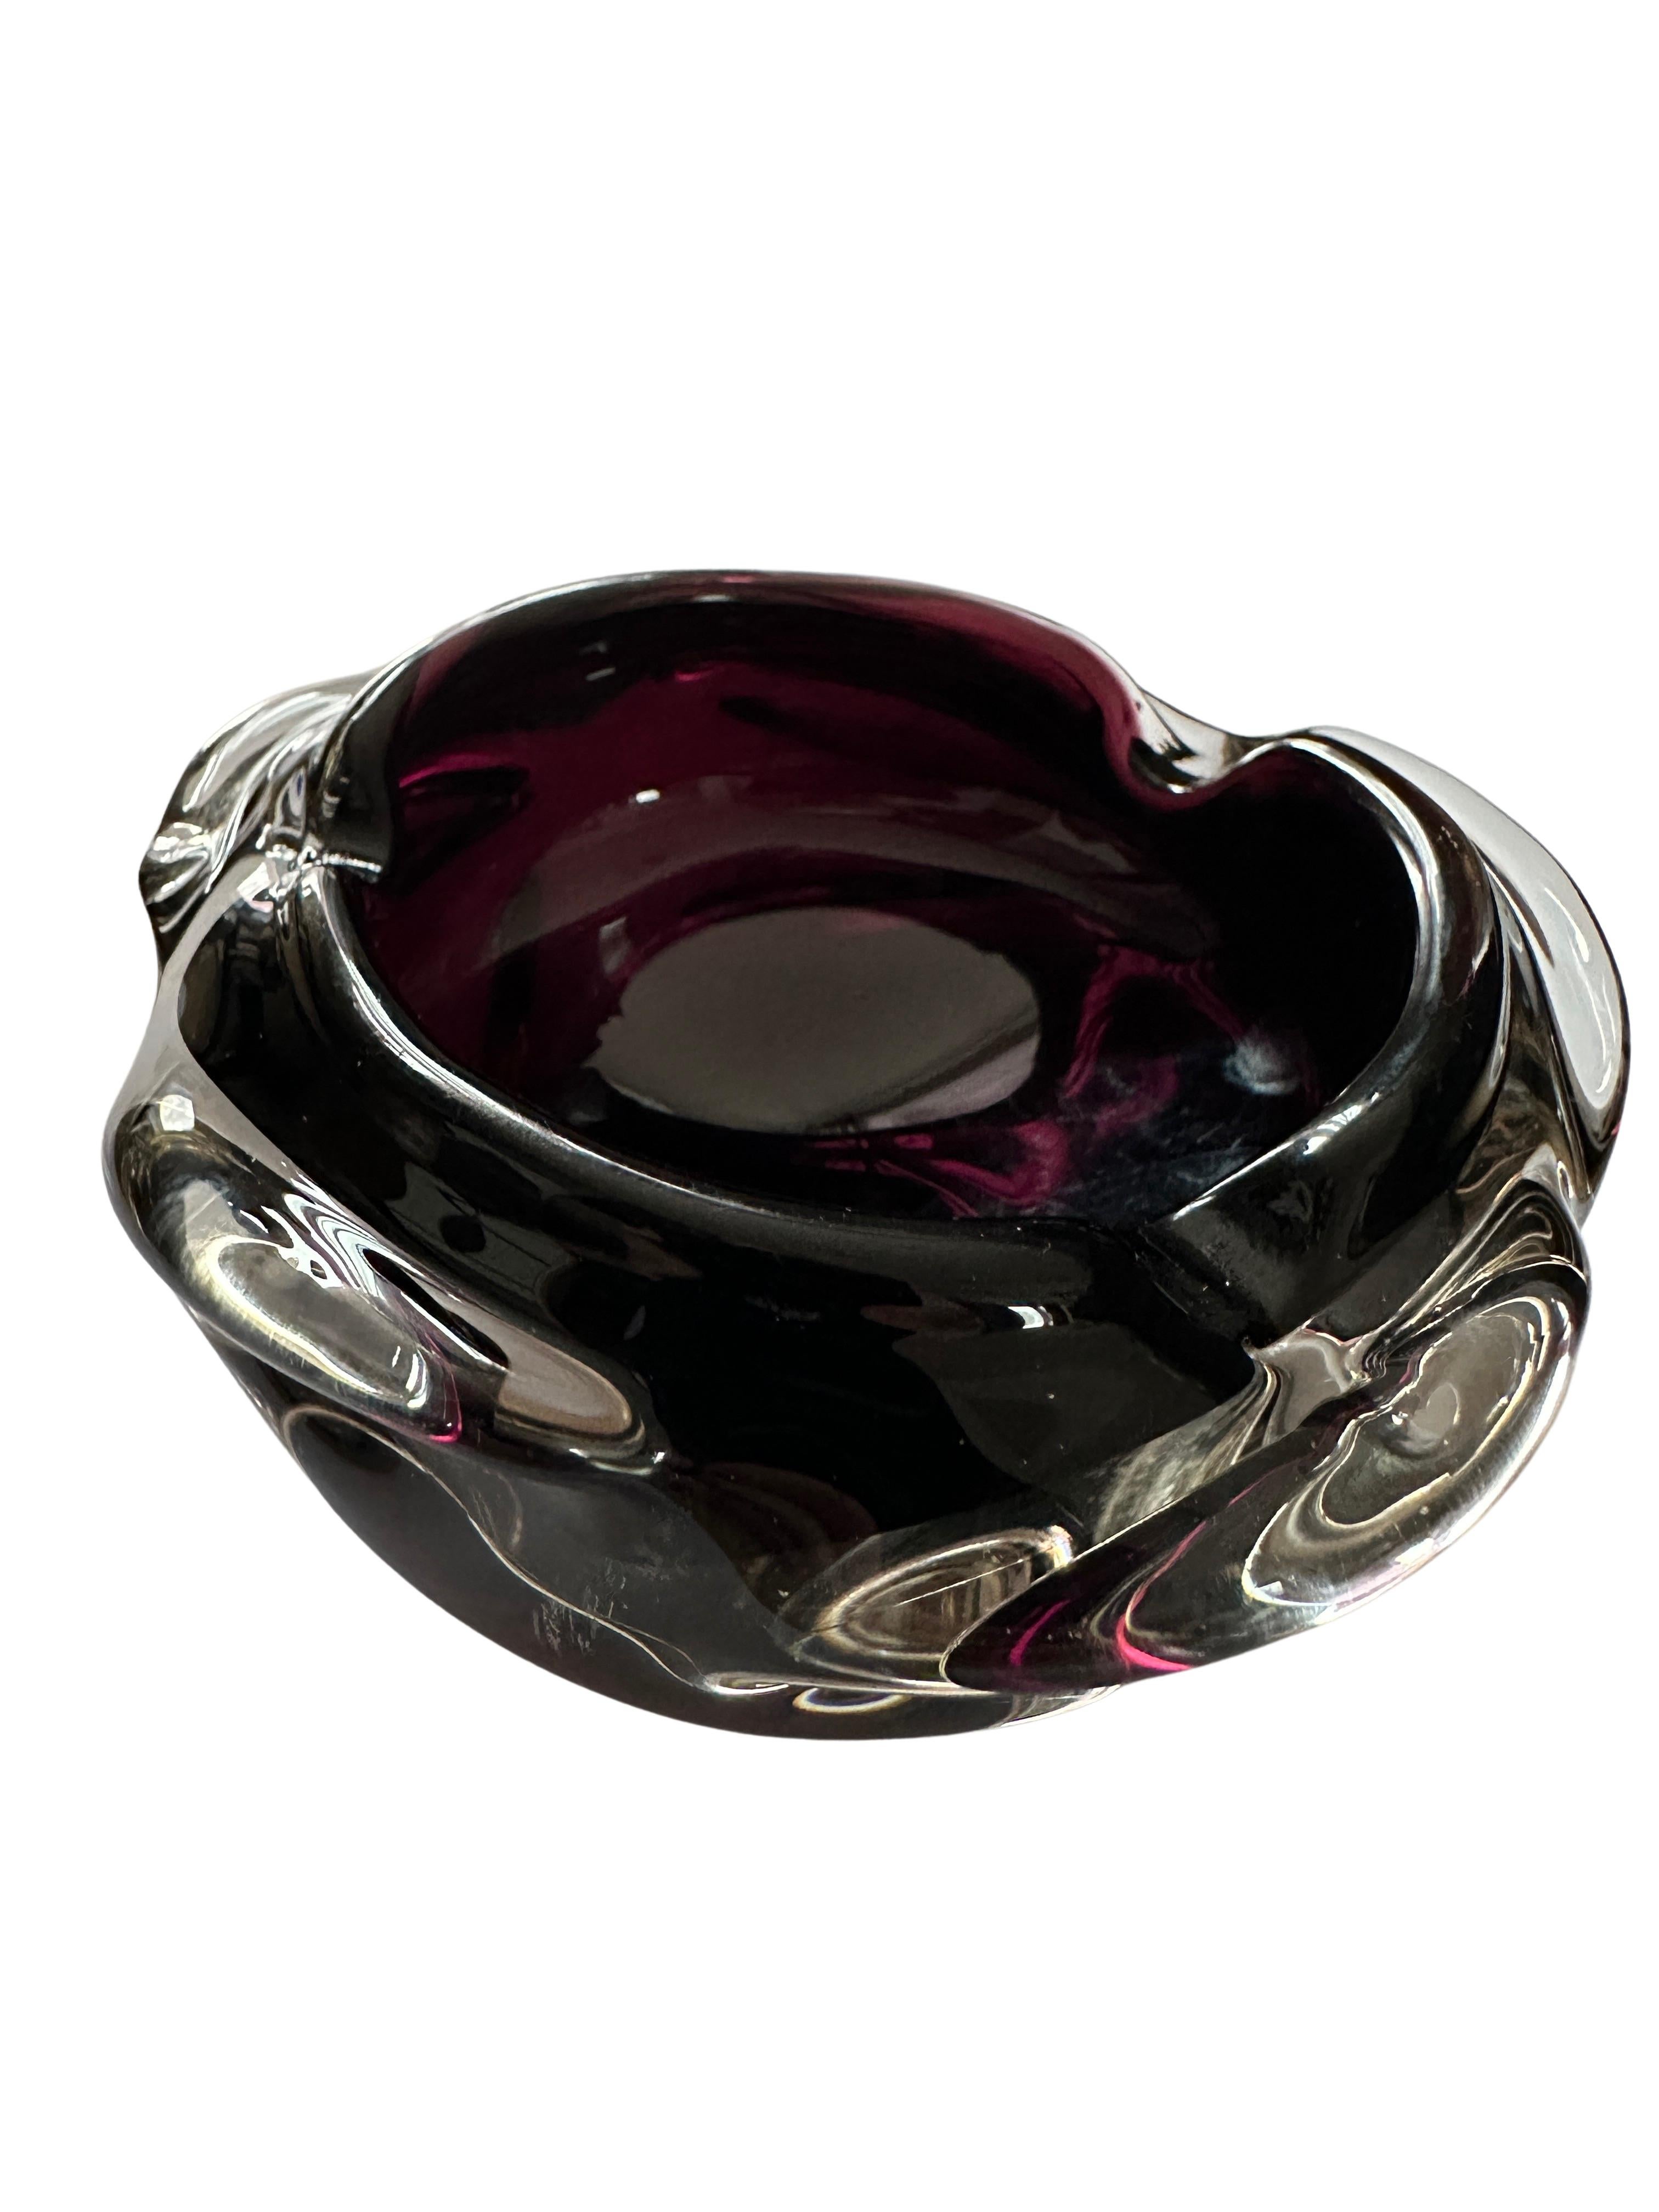 Polish Midcentury Bowl in Dark Burgundy Color, 1960s For Sale